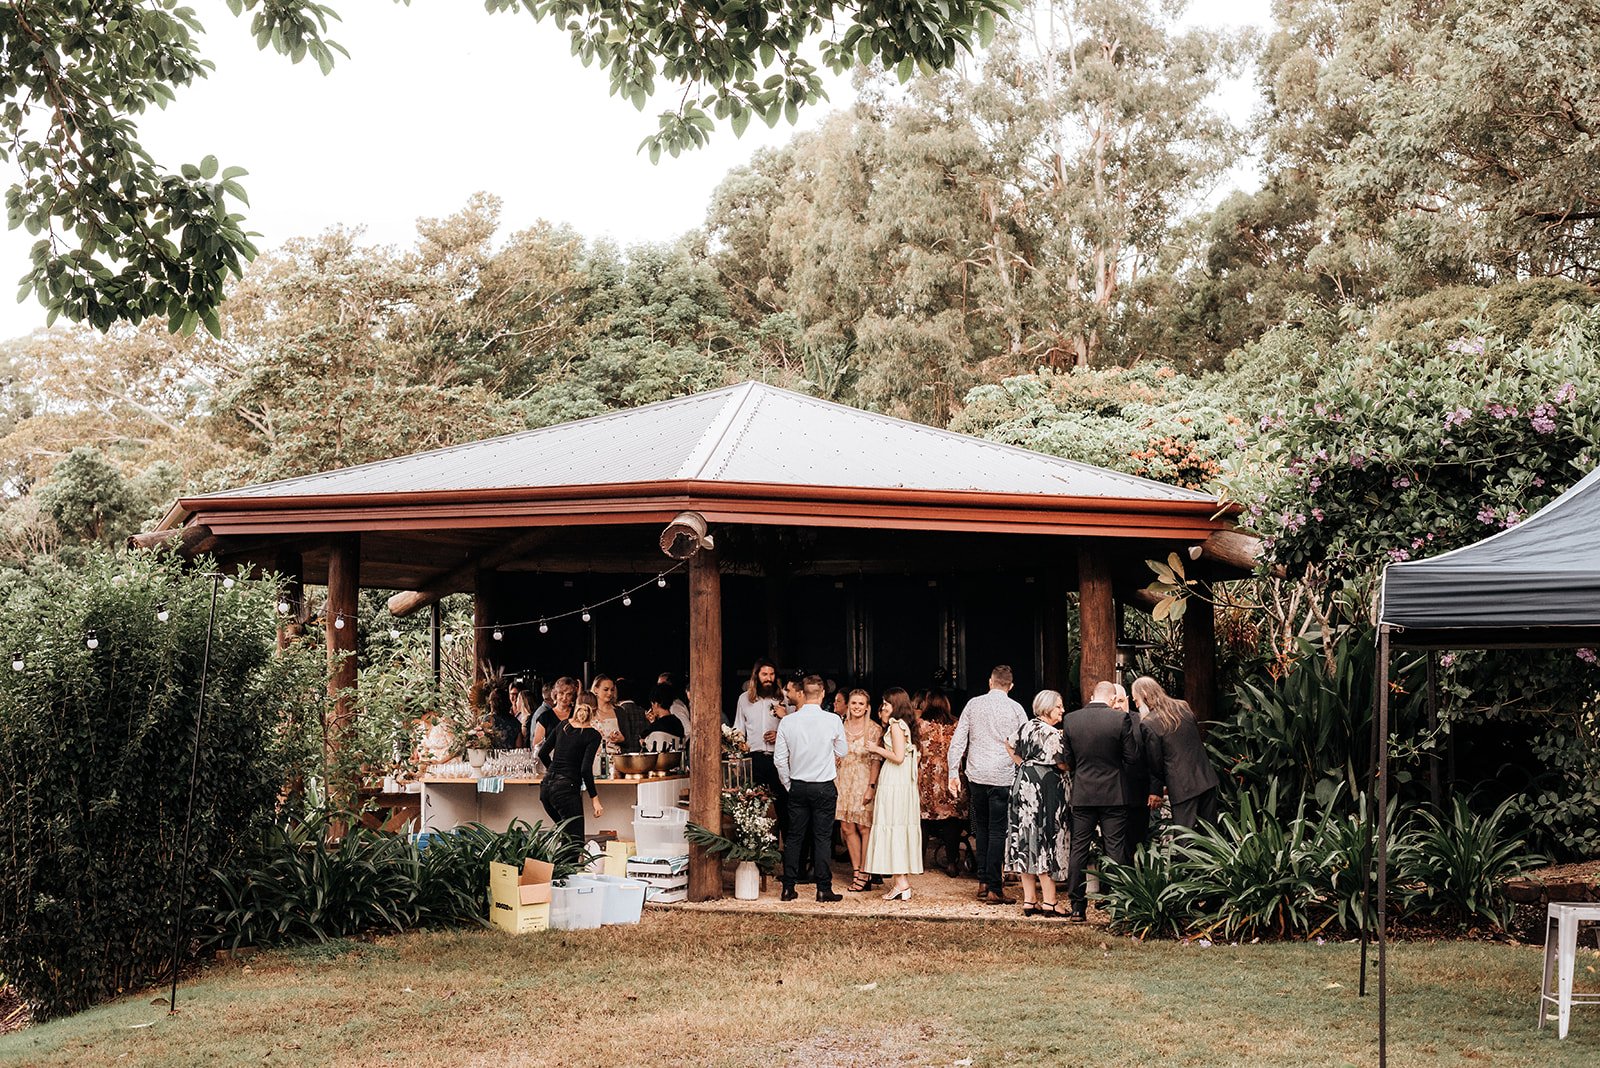 LOVELENSCAPES • The Figs Byron Bay Wedding • Chosen by Kyha • T&C • 394_websize.jpg